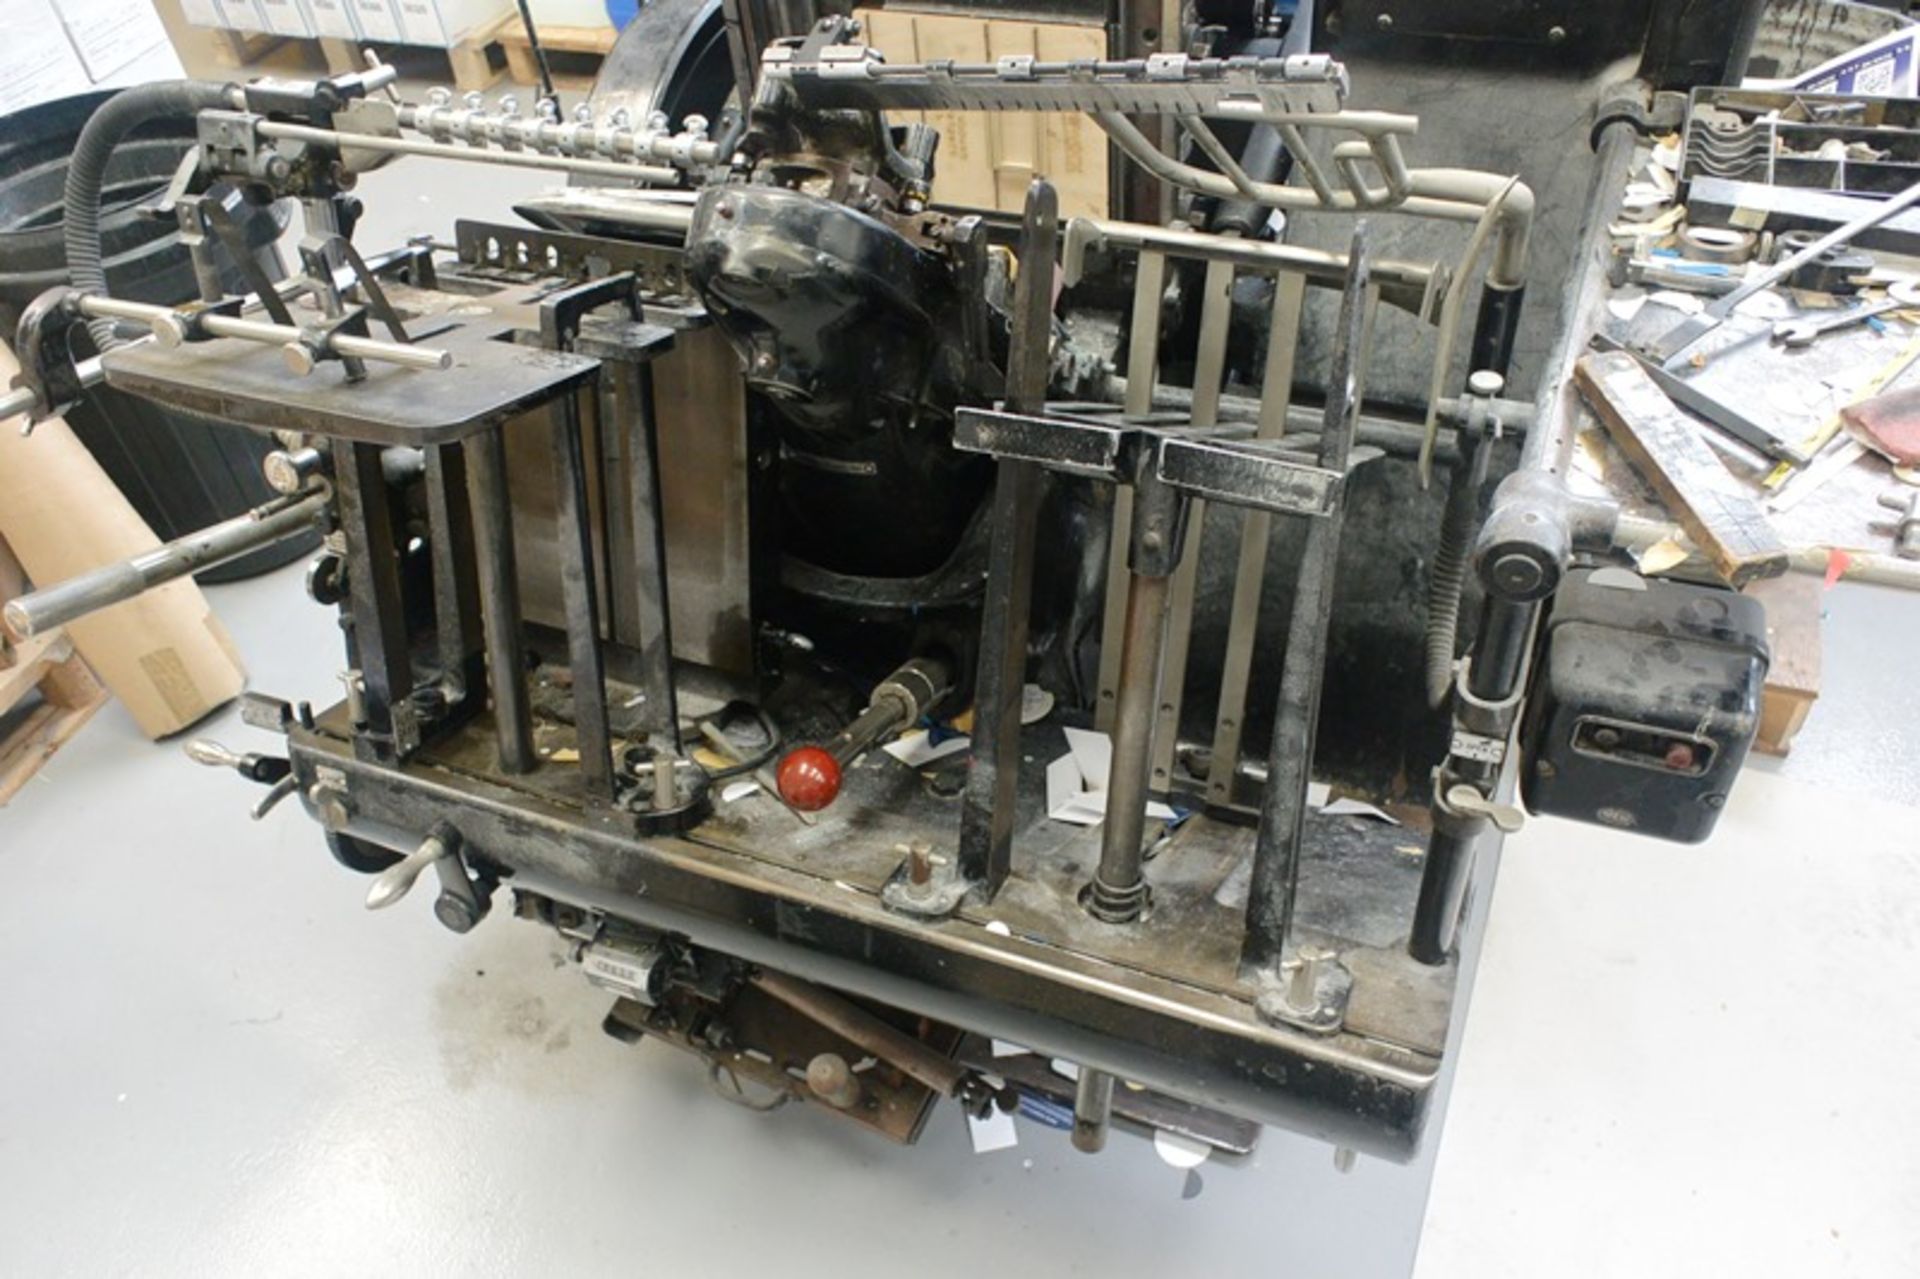 Original Heidelberg platen type cutting and creasing press, serial no. 138280E, 34 x 26cm platen - Image 2 of 5